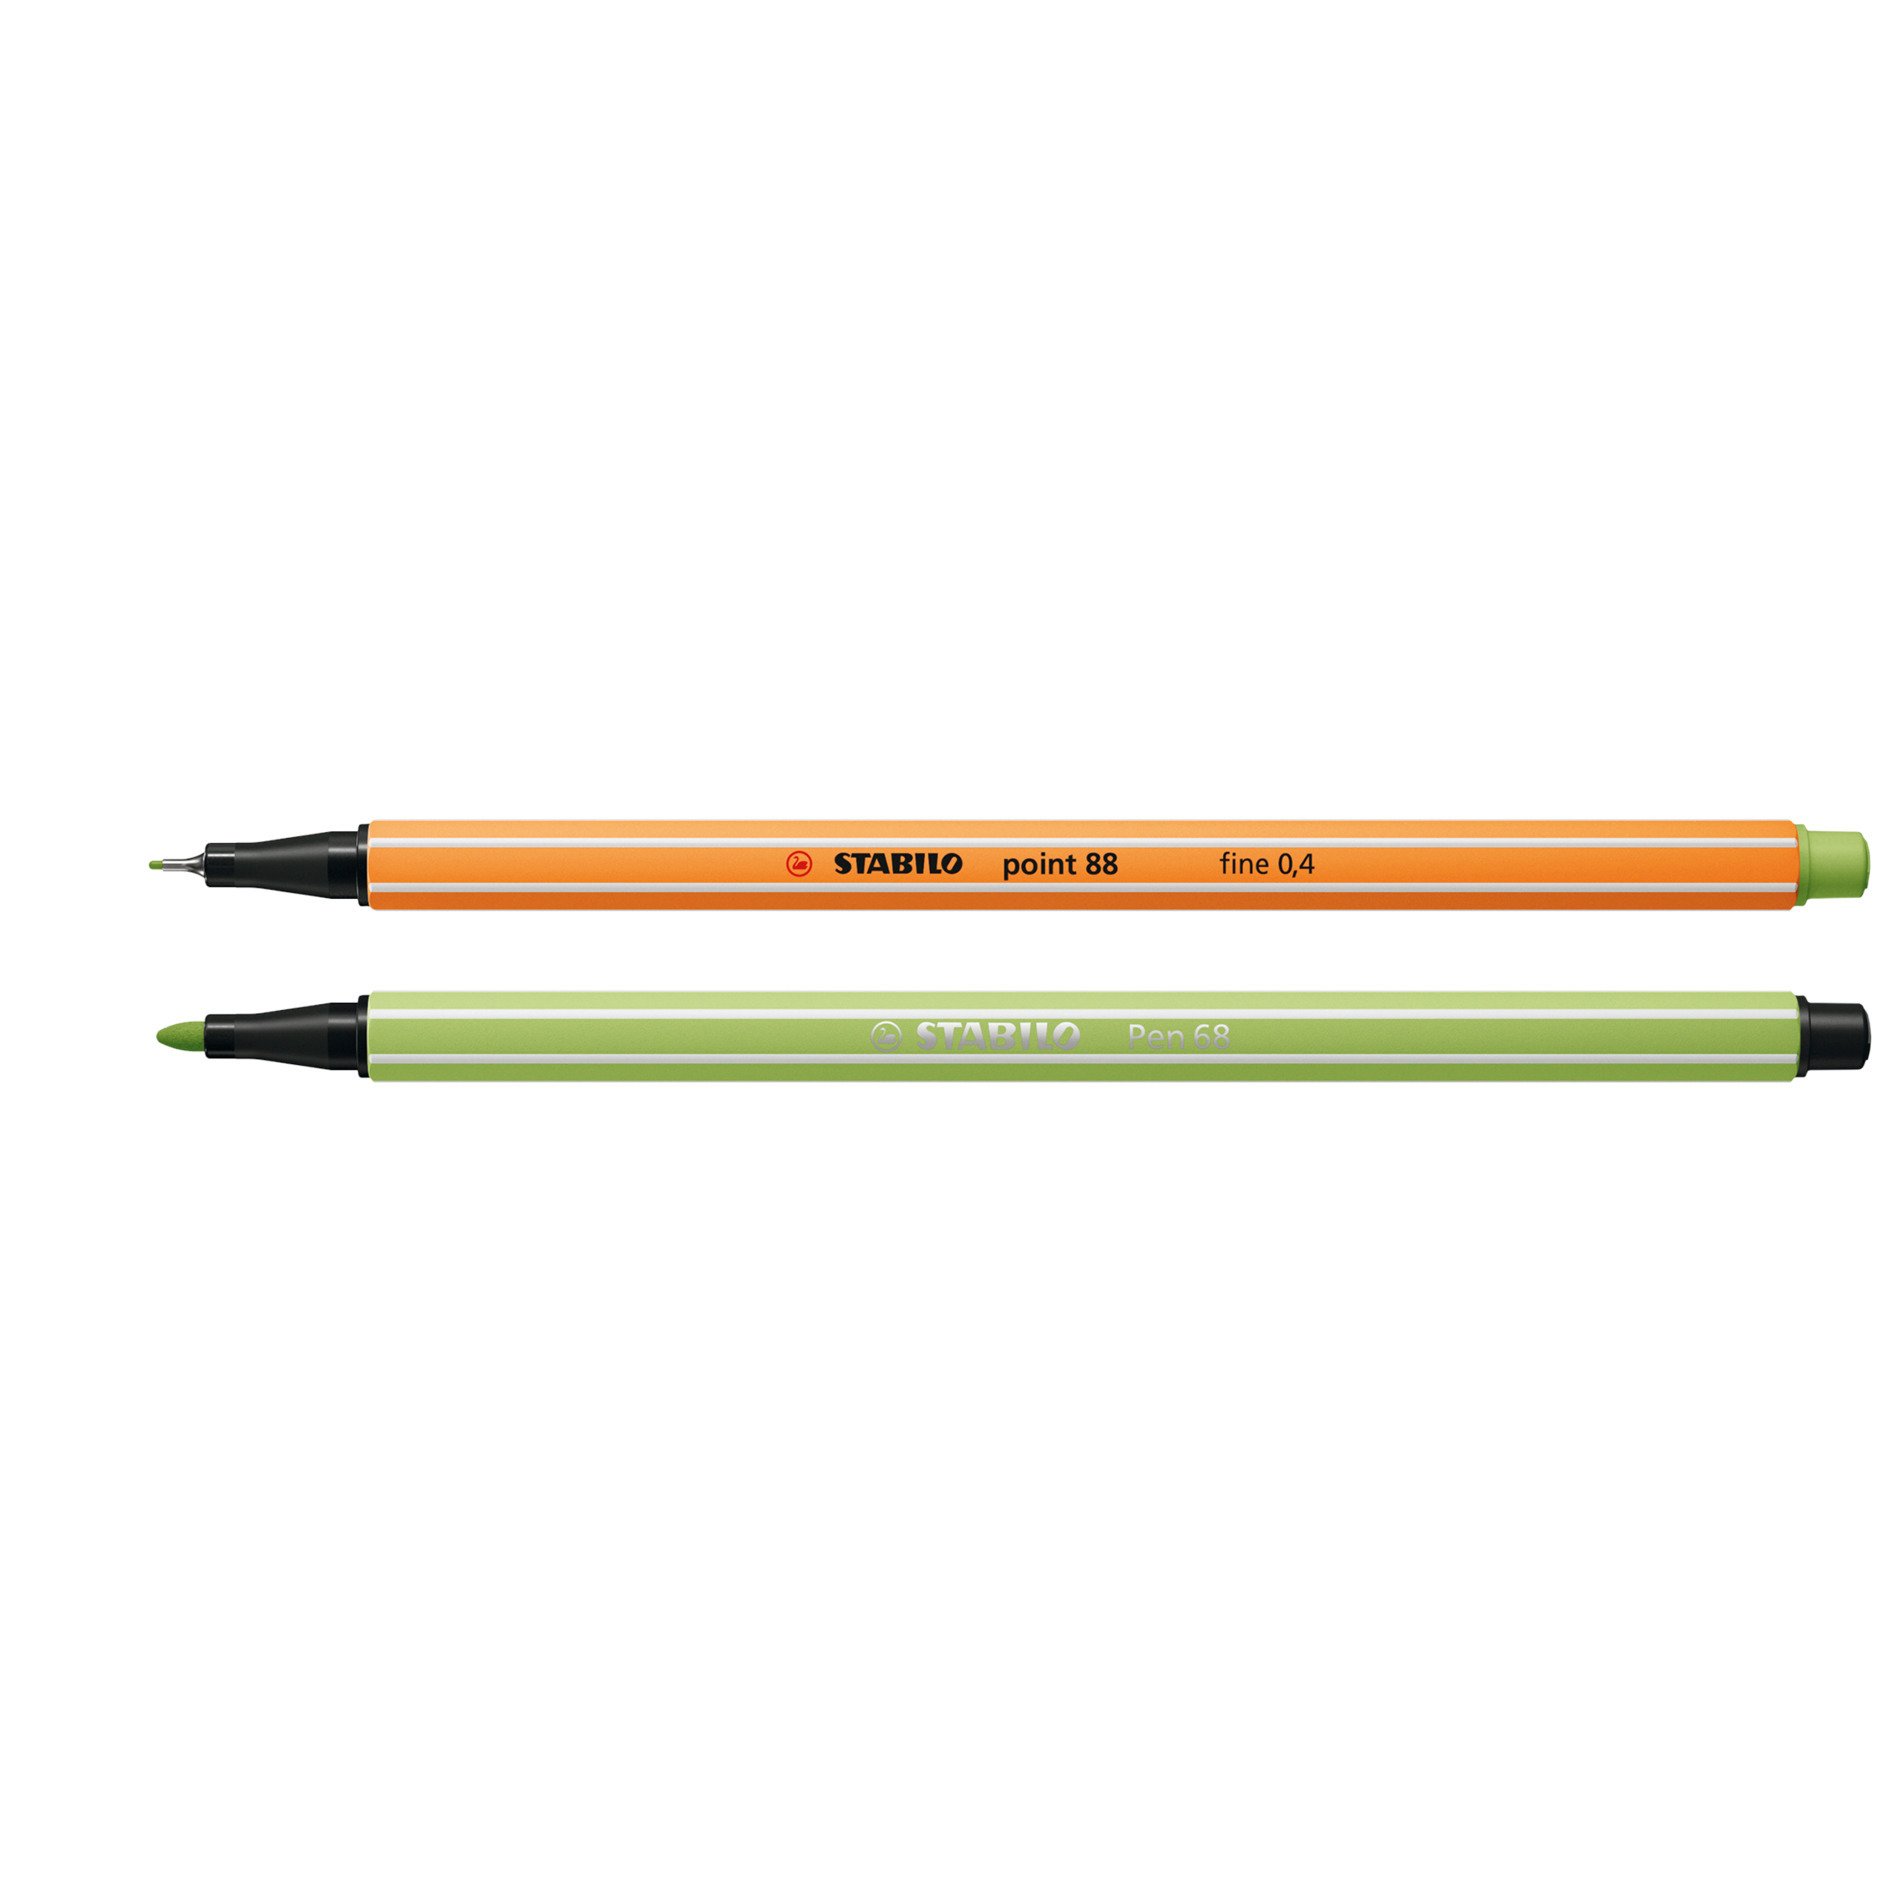  STABILO Premium Felt Tip Pen & Fineliner Pen 68 & point 88 -  Wallet of 10 - Assorted Neon colors : Office Products